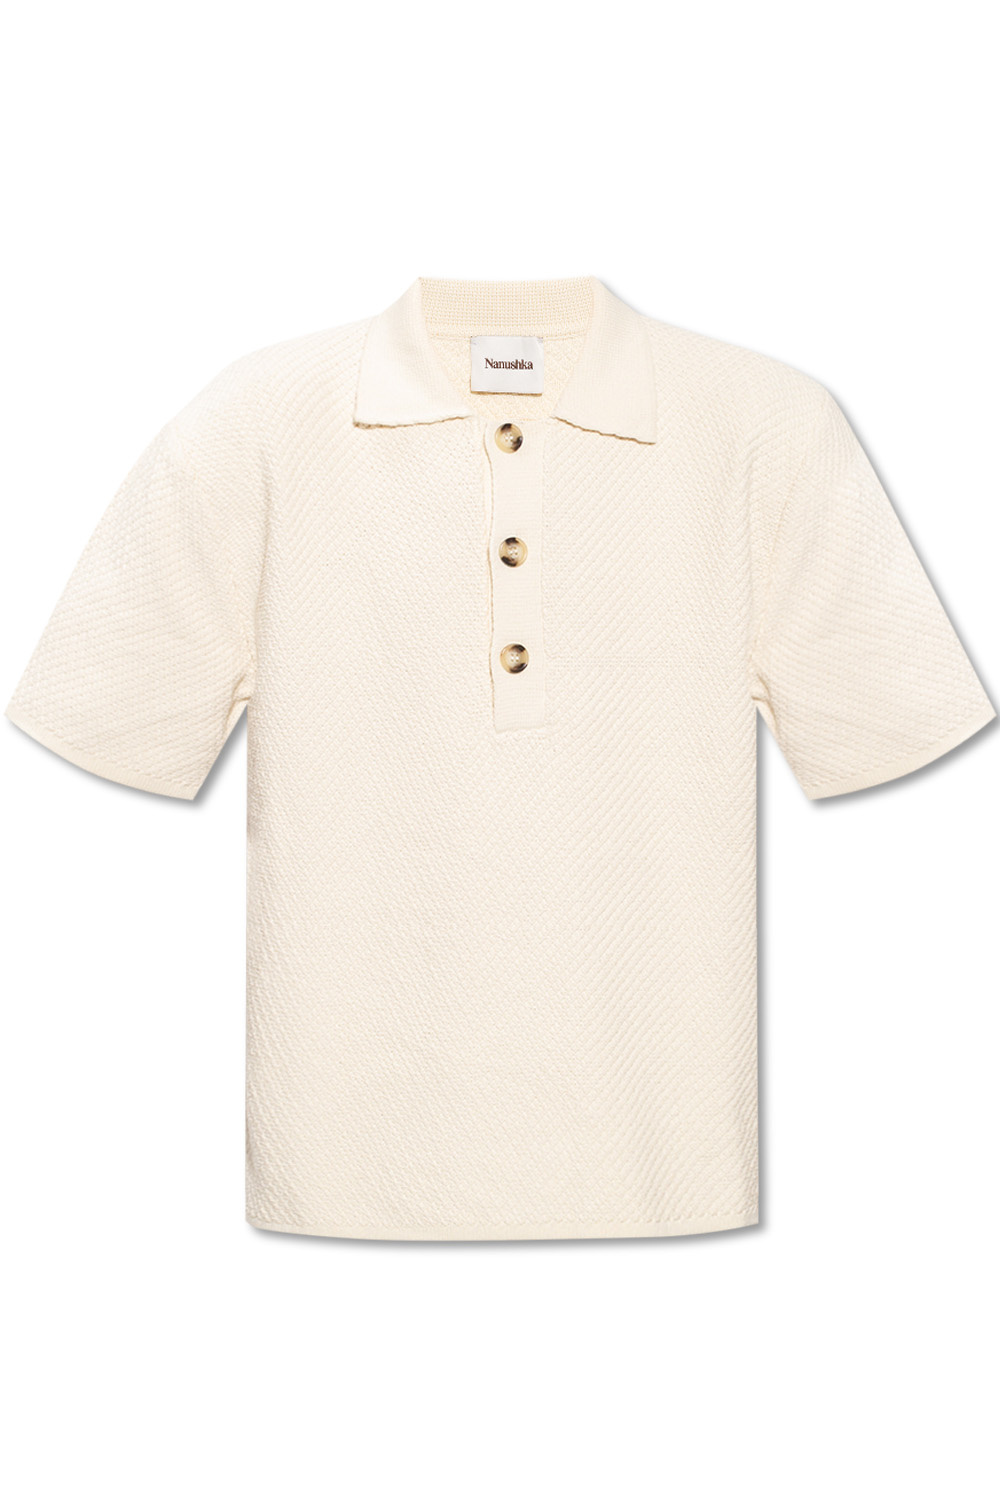 Nanushka ‘Tallis’ polo shirt